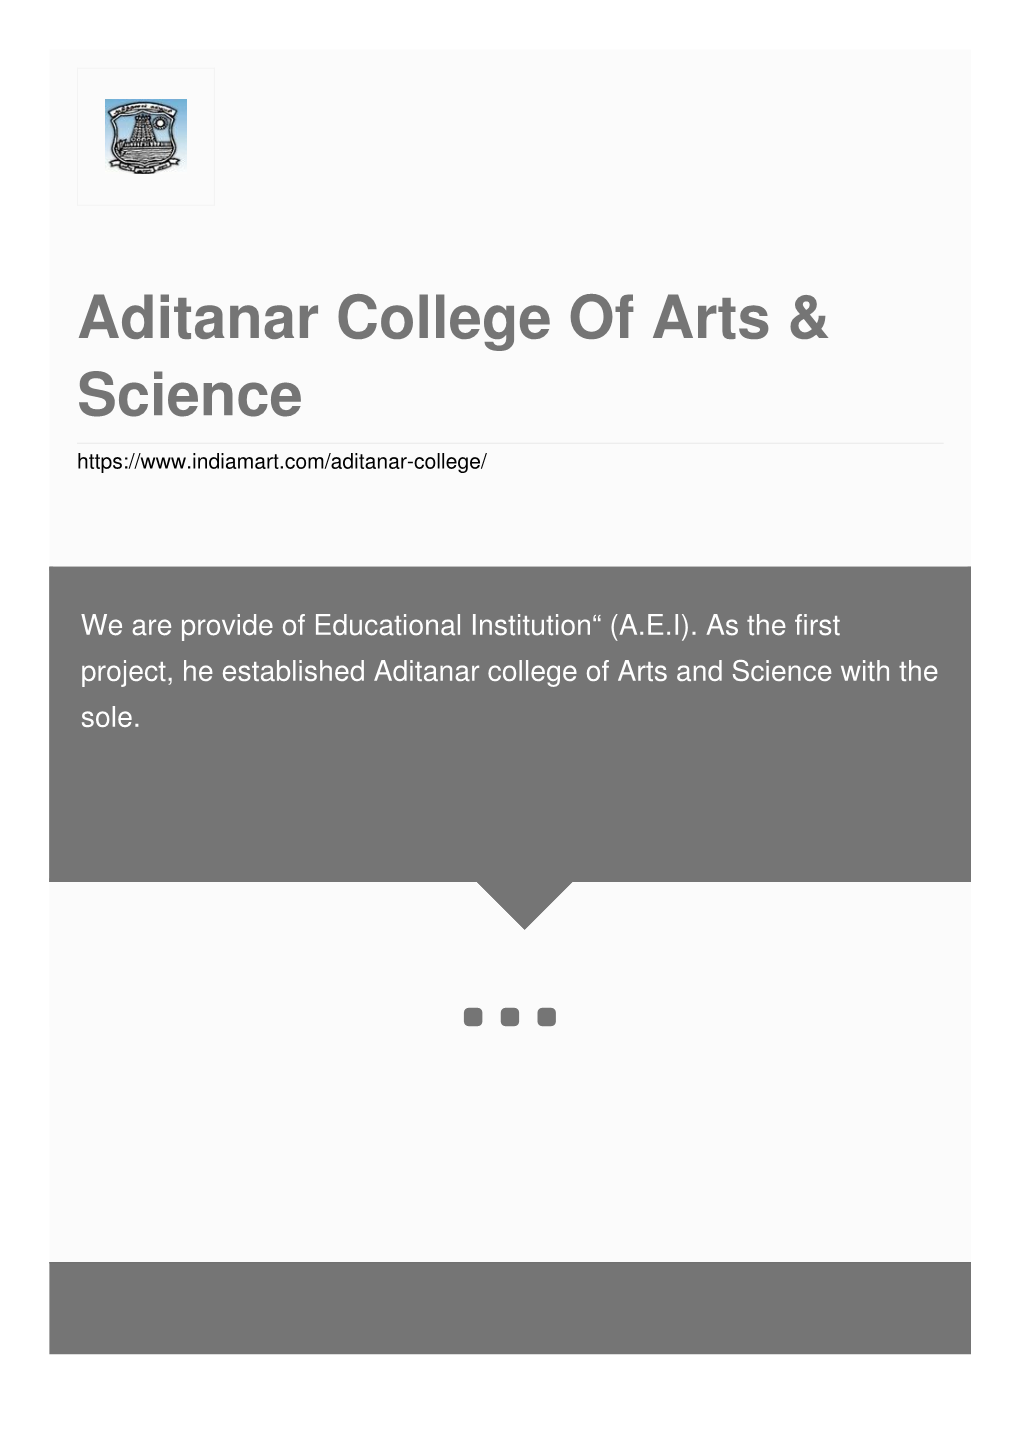 Aditanar College of Arts & Science